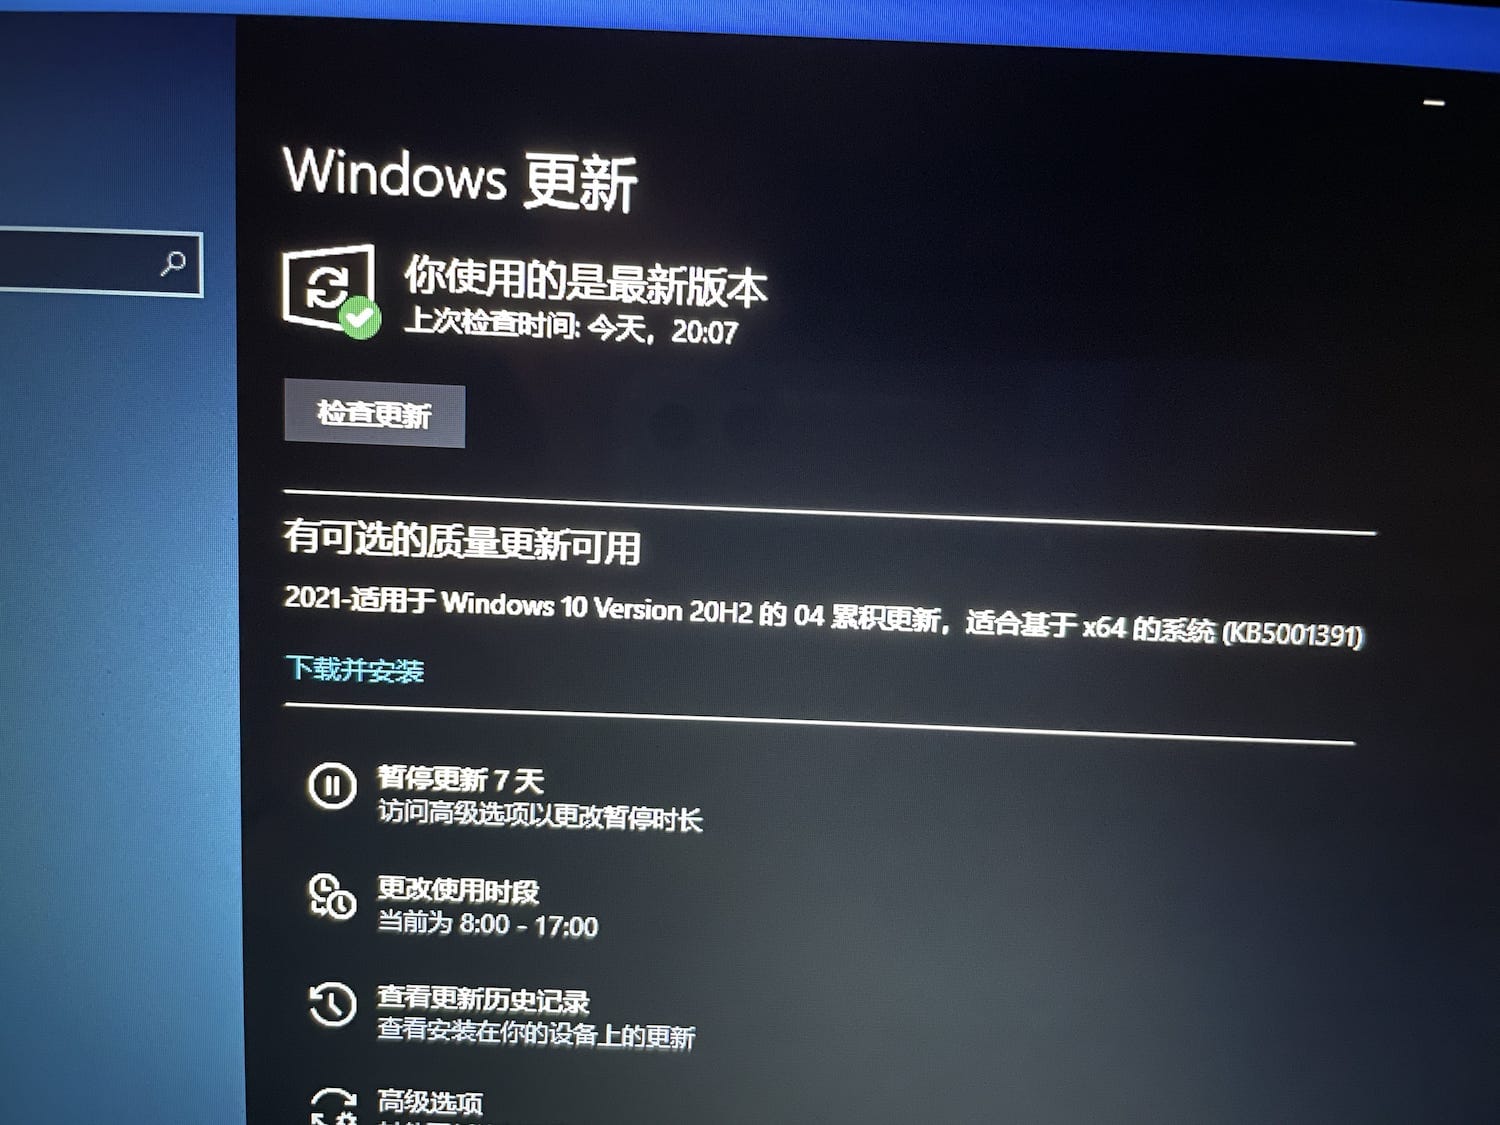 windows_update